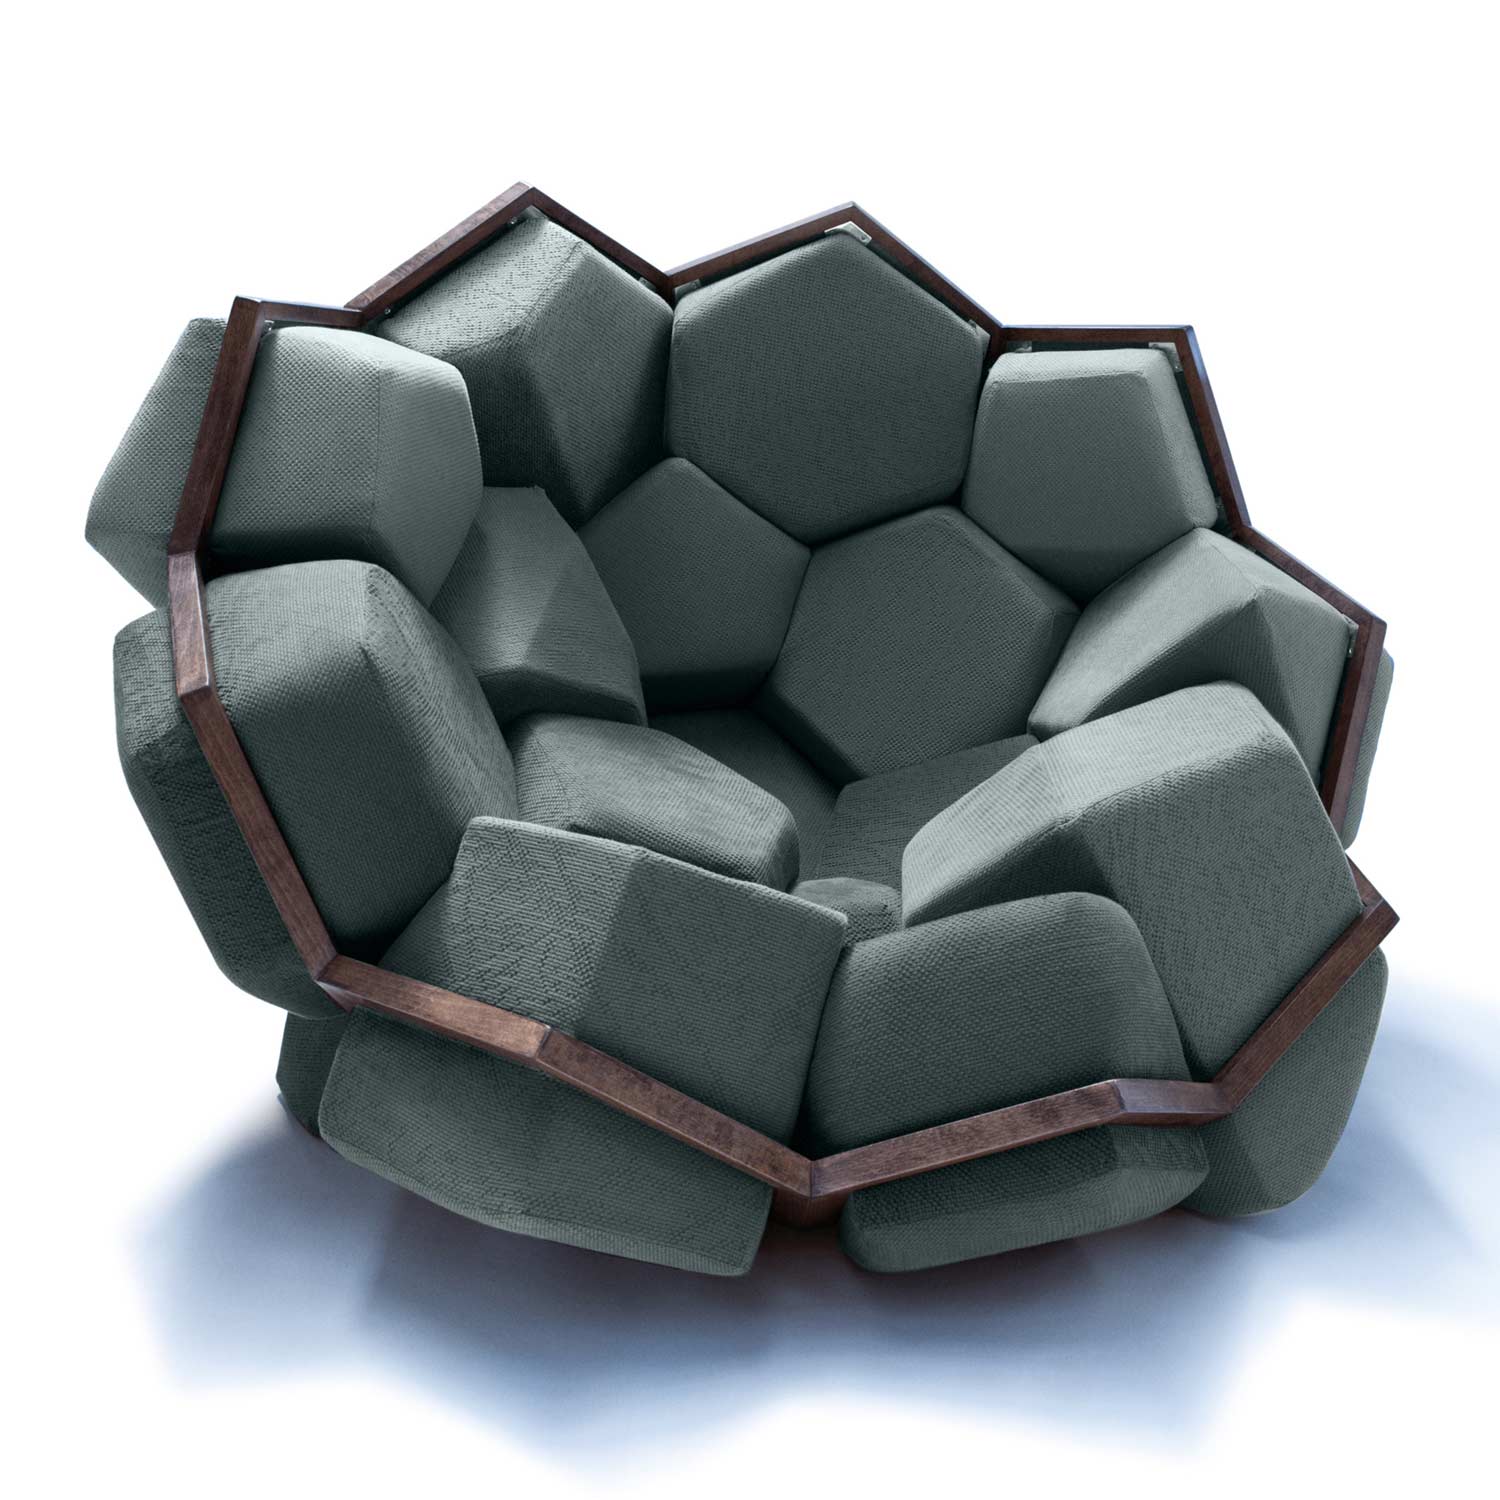 Unmatched Allure of Quartz, grey geometric armchair